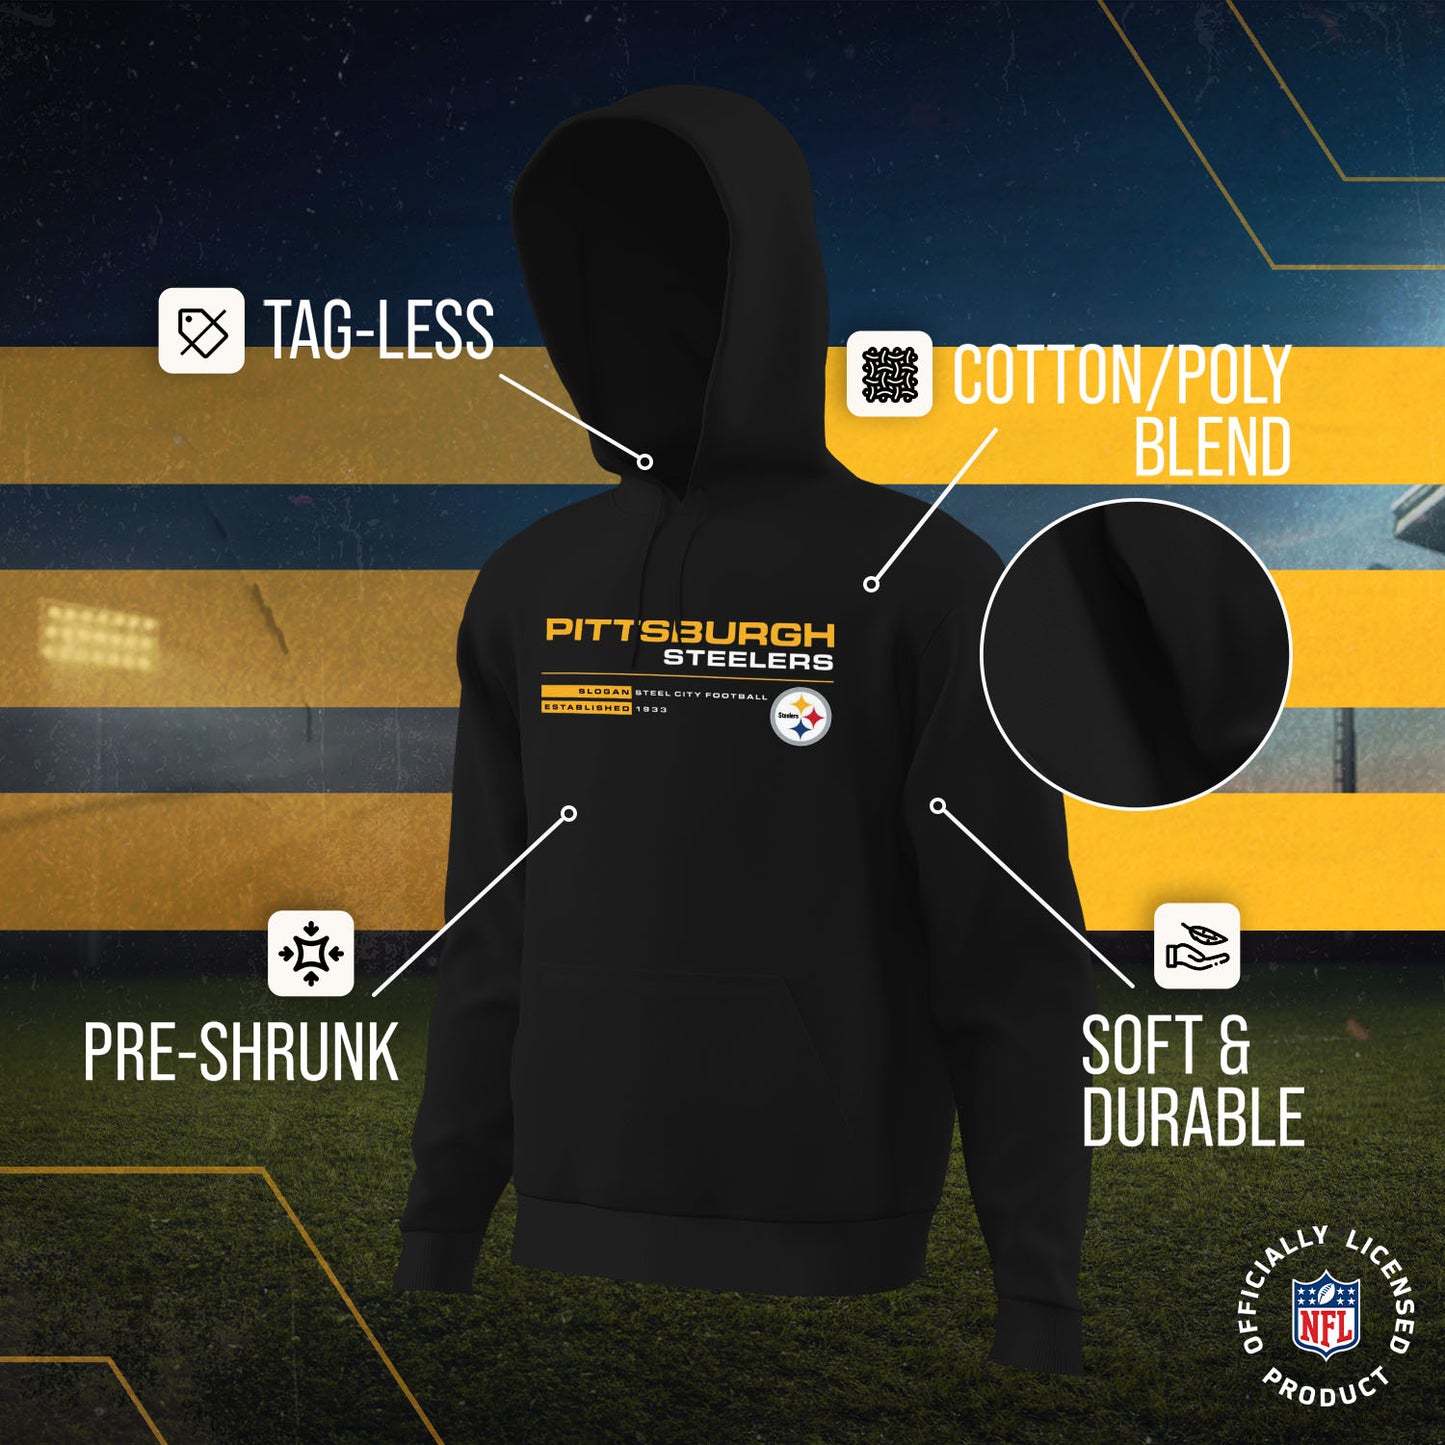 Pittsburgh Steelers Adult NFL Speed Stat Sheet Fleece Hooded Sweatshirt - Black